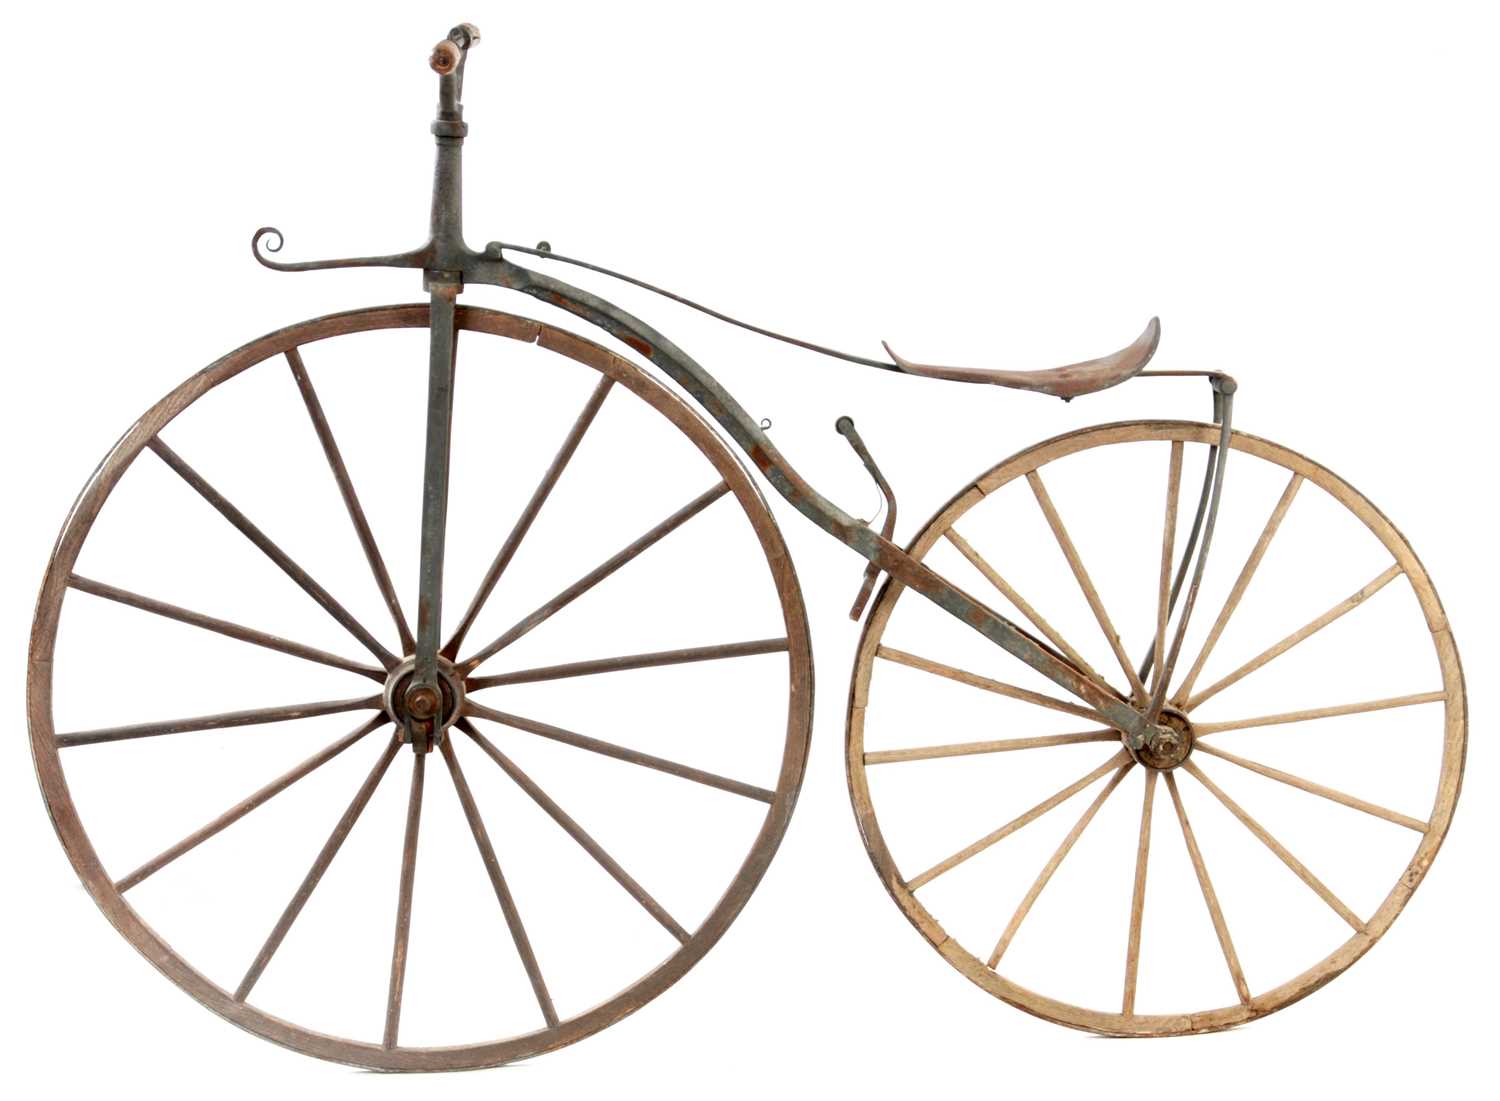 Lot 101 - A MID 19TH CENTURY "BONESHAKER" BICYCLE